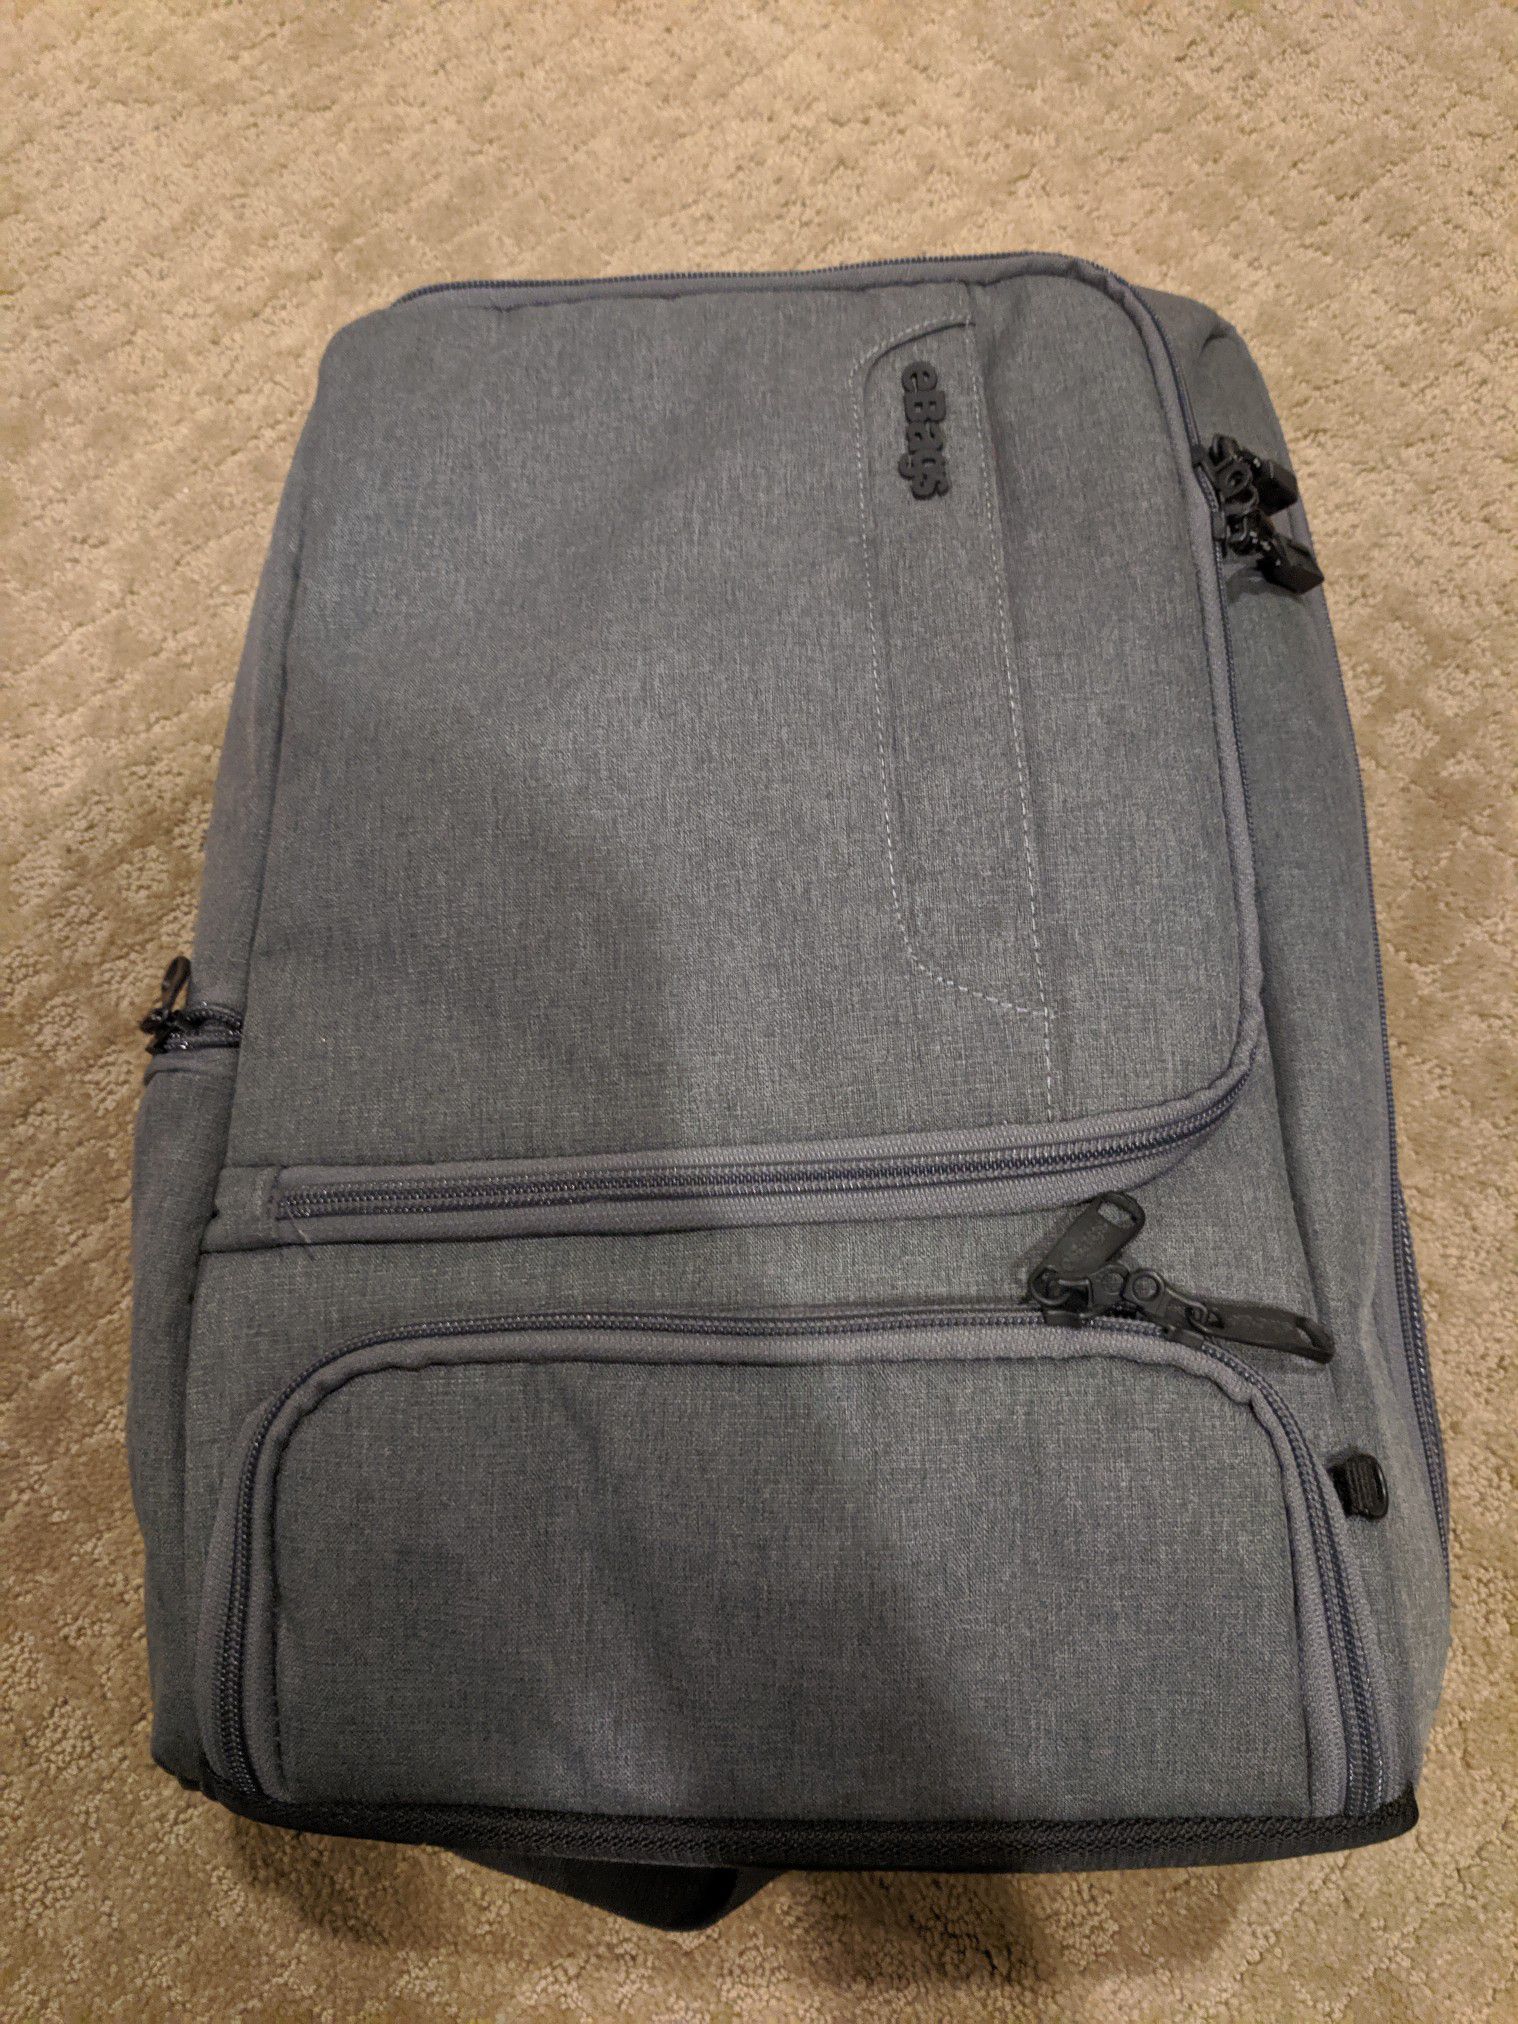 eBags laptop backpack